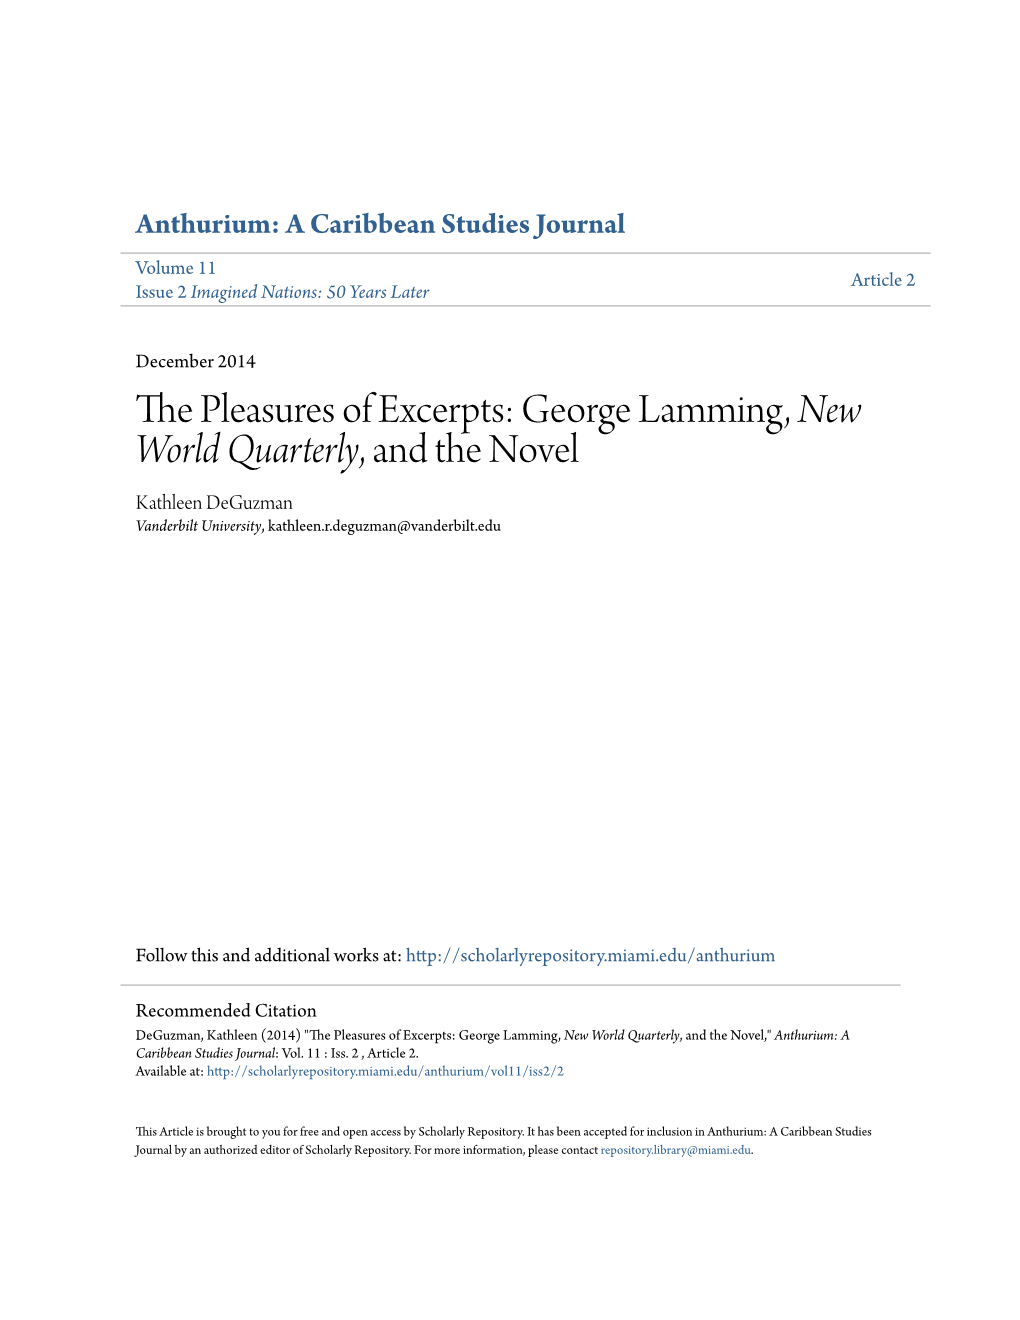 George Lamming, New World Quarterly, and the Novel Kathleen Deguzman Vanderbilt University, Kathleen.R.Deguzman@Vanderbilt.Edu